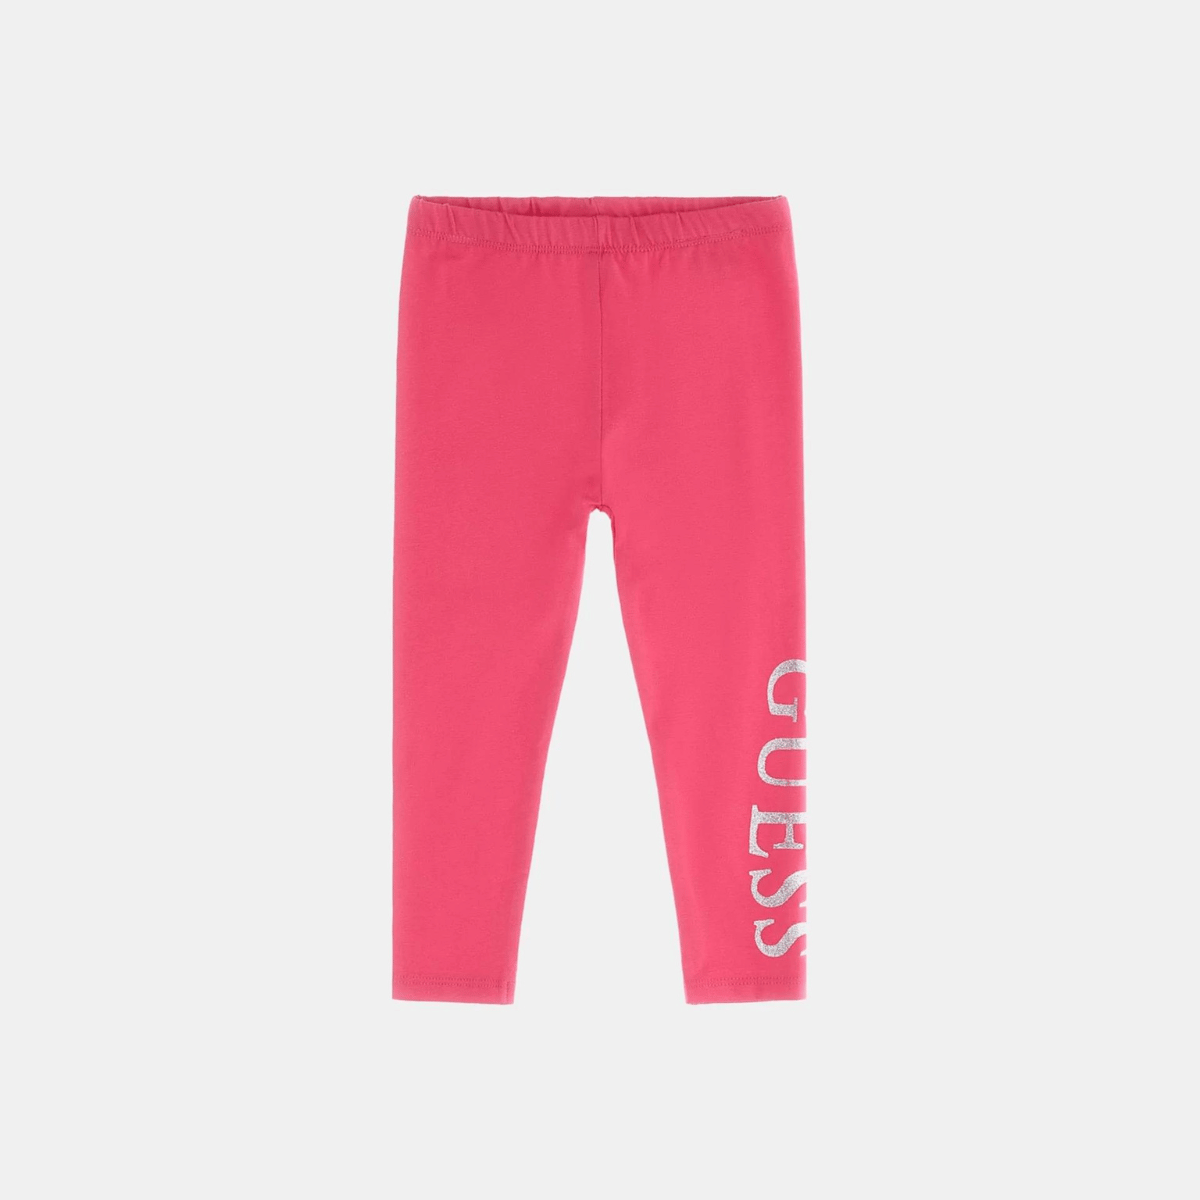 Guess Girls Fuschia Pink Leggings - Kids Life Clothing - Children's  designer clothing